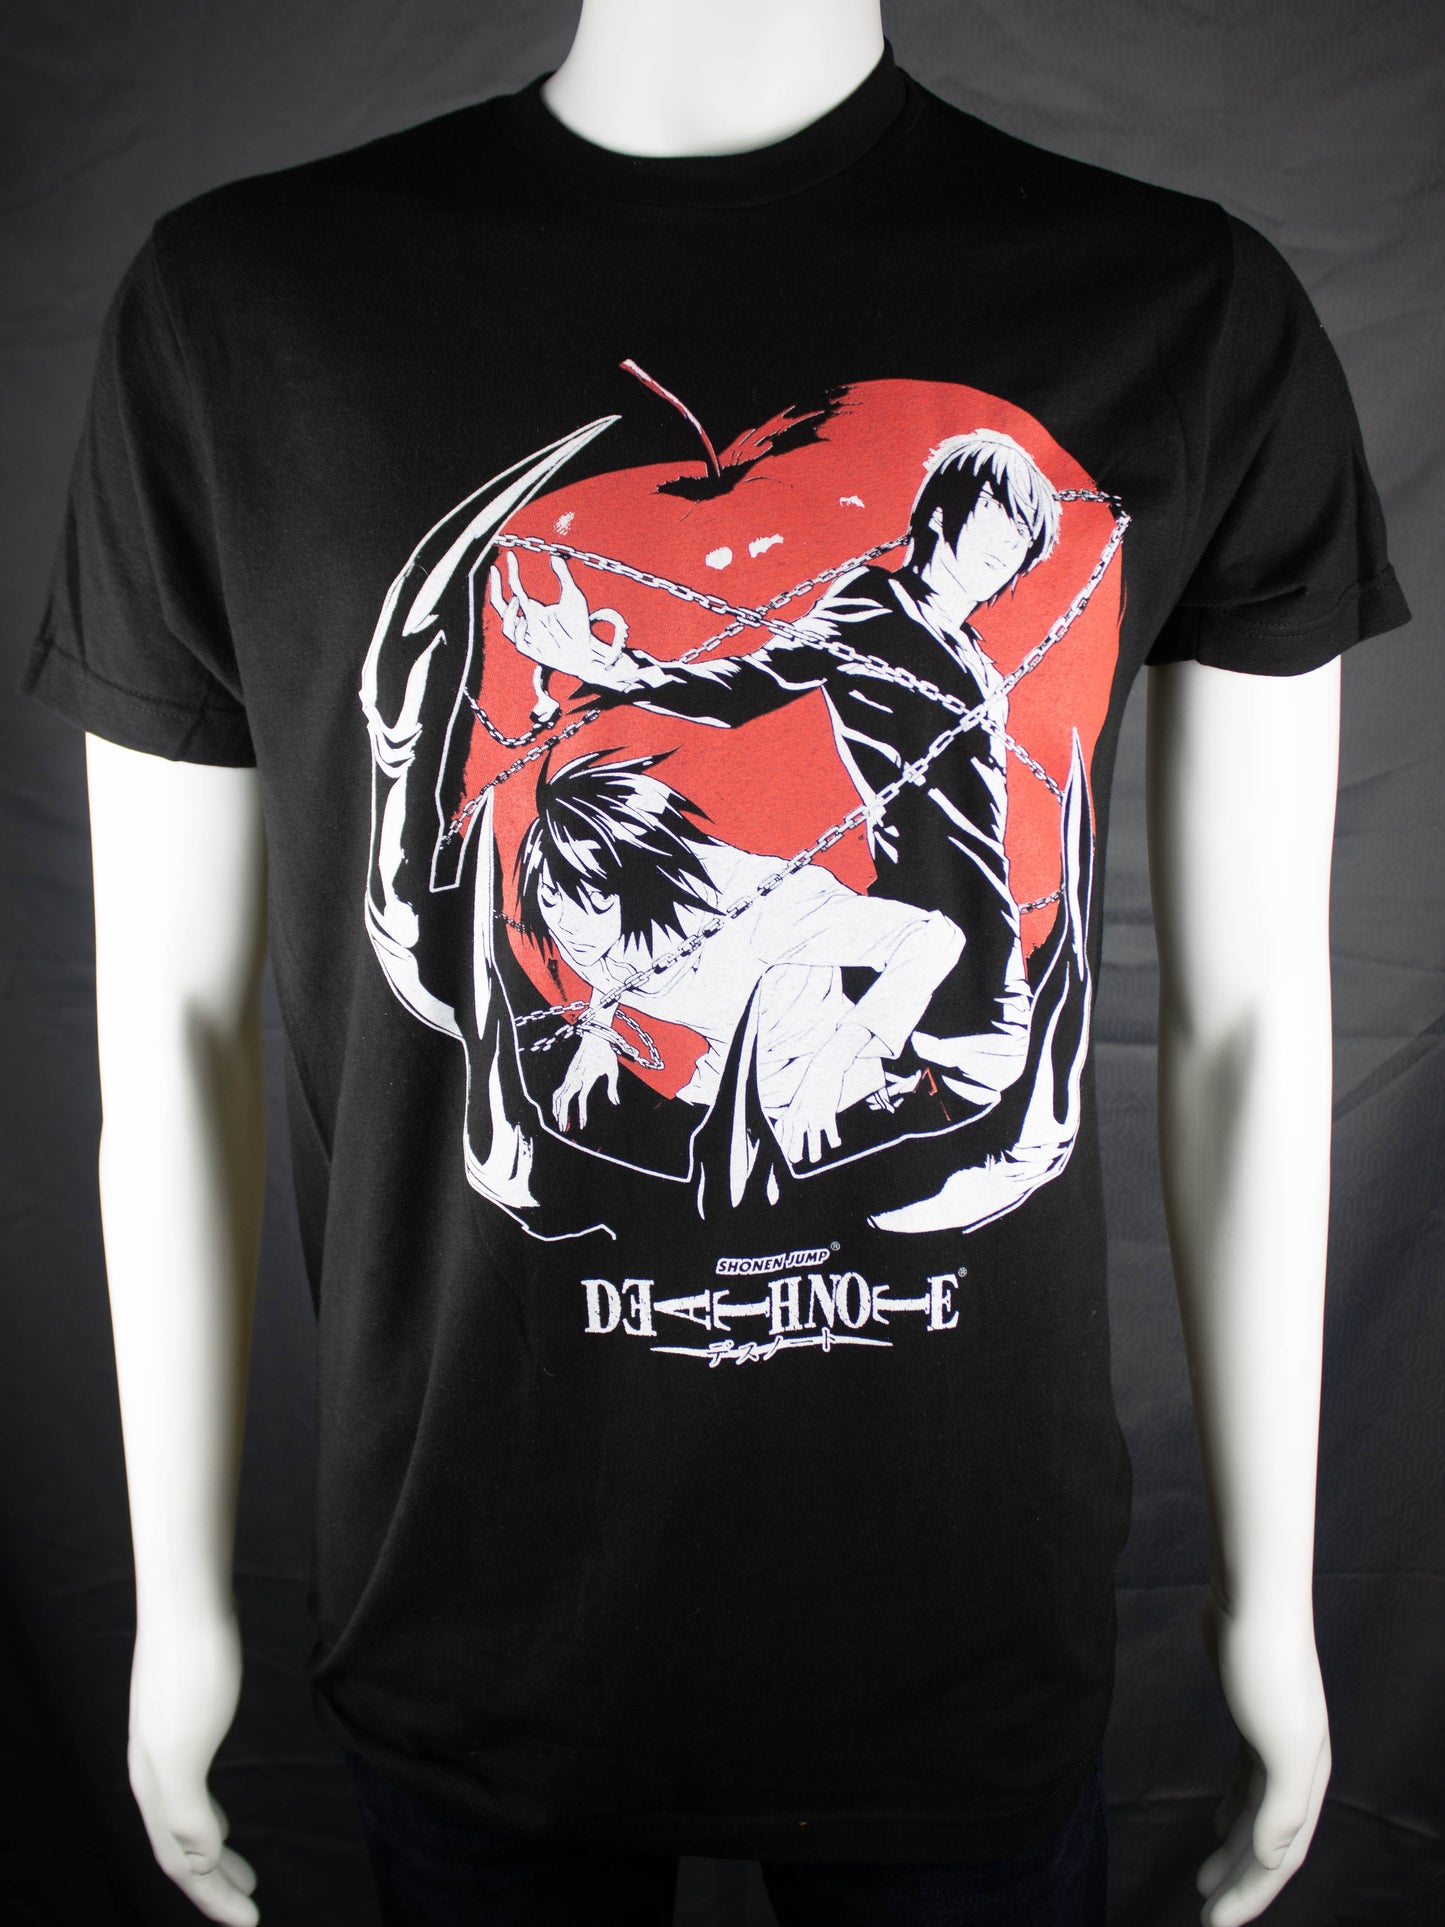 Light & L (Death Note) Black Shirt